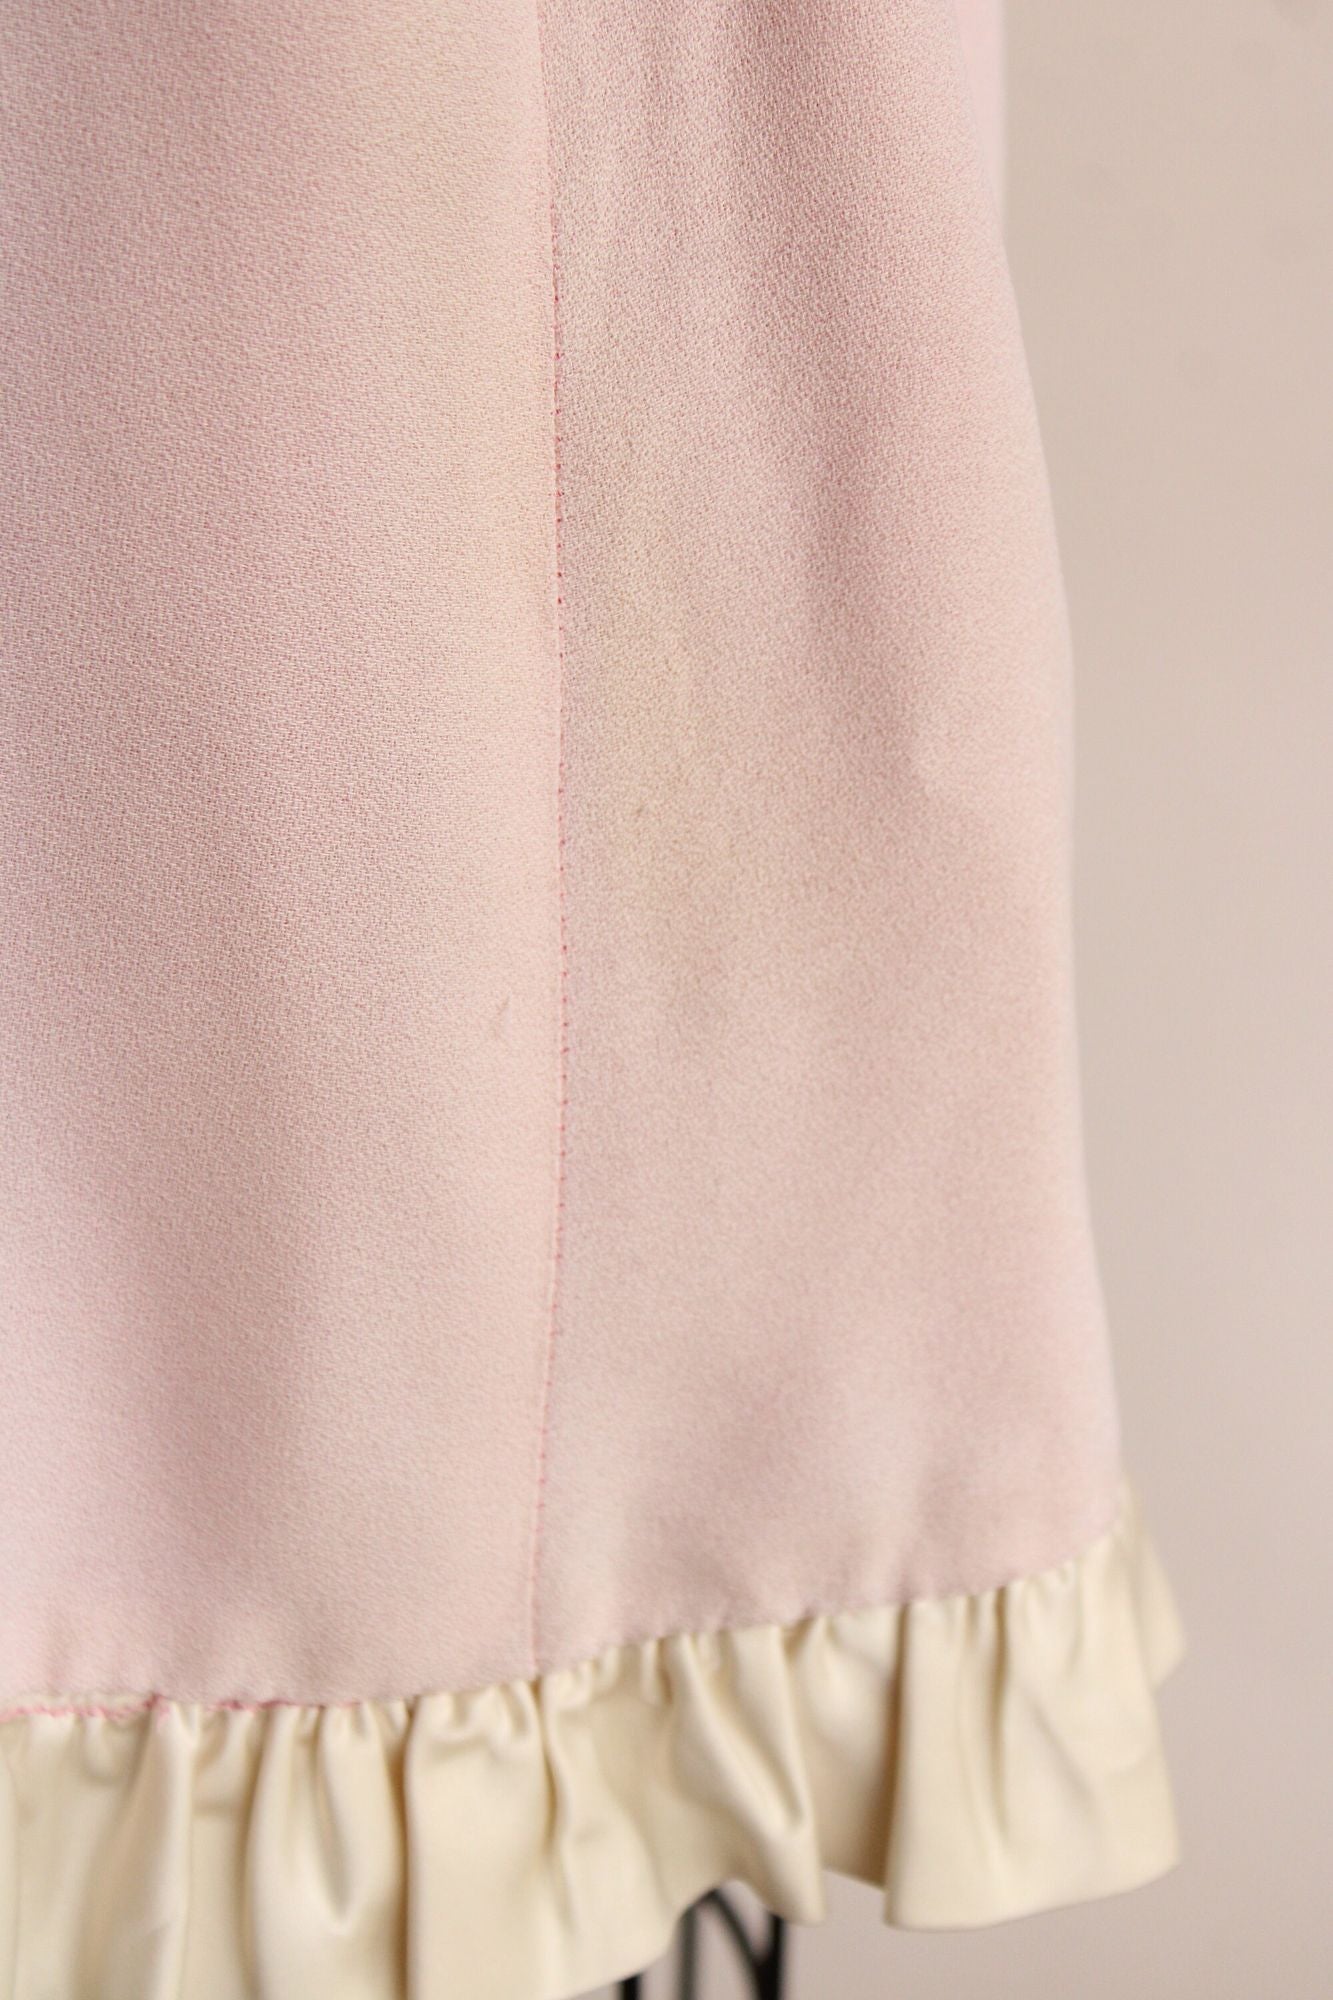 Vintage 1960s Pink Crepe And Ivory Satin Mini Dress